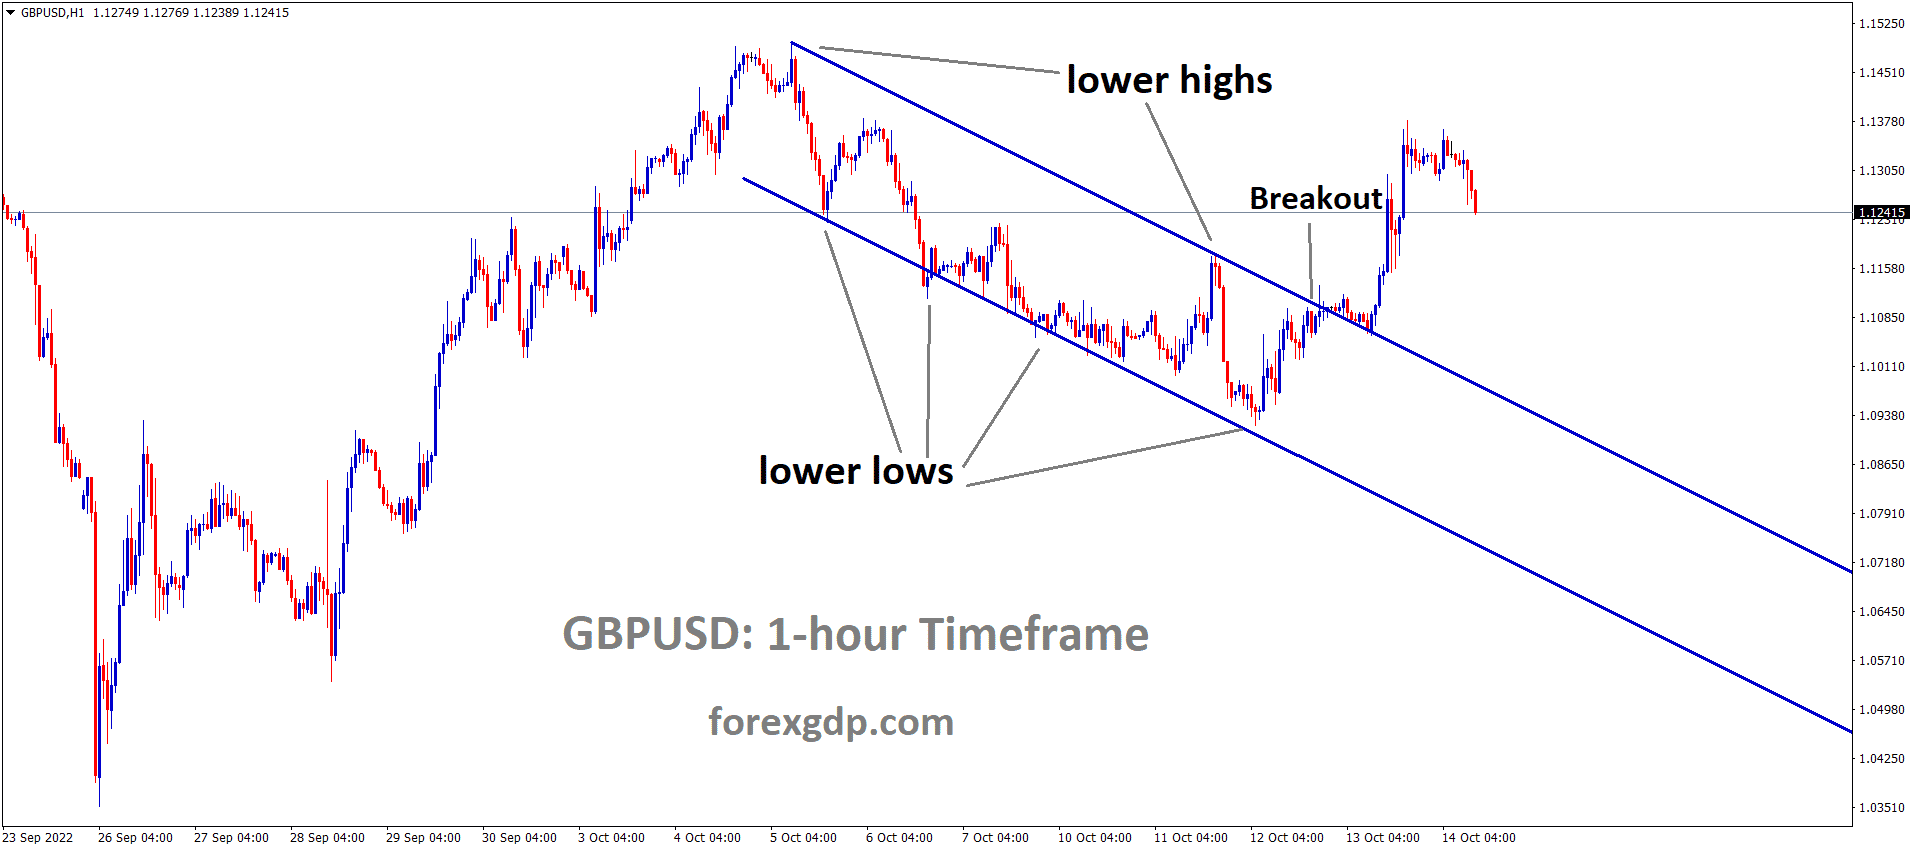 GBPUSD has broken the Descending channel in Upside